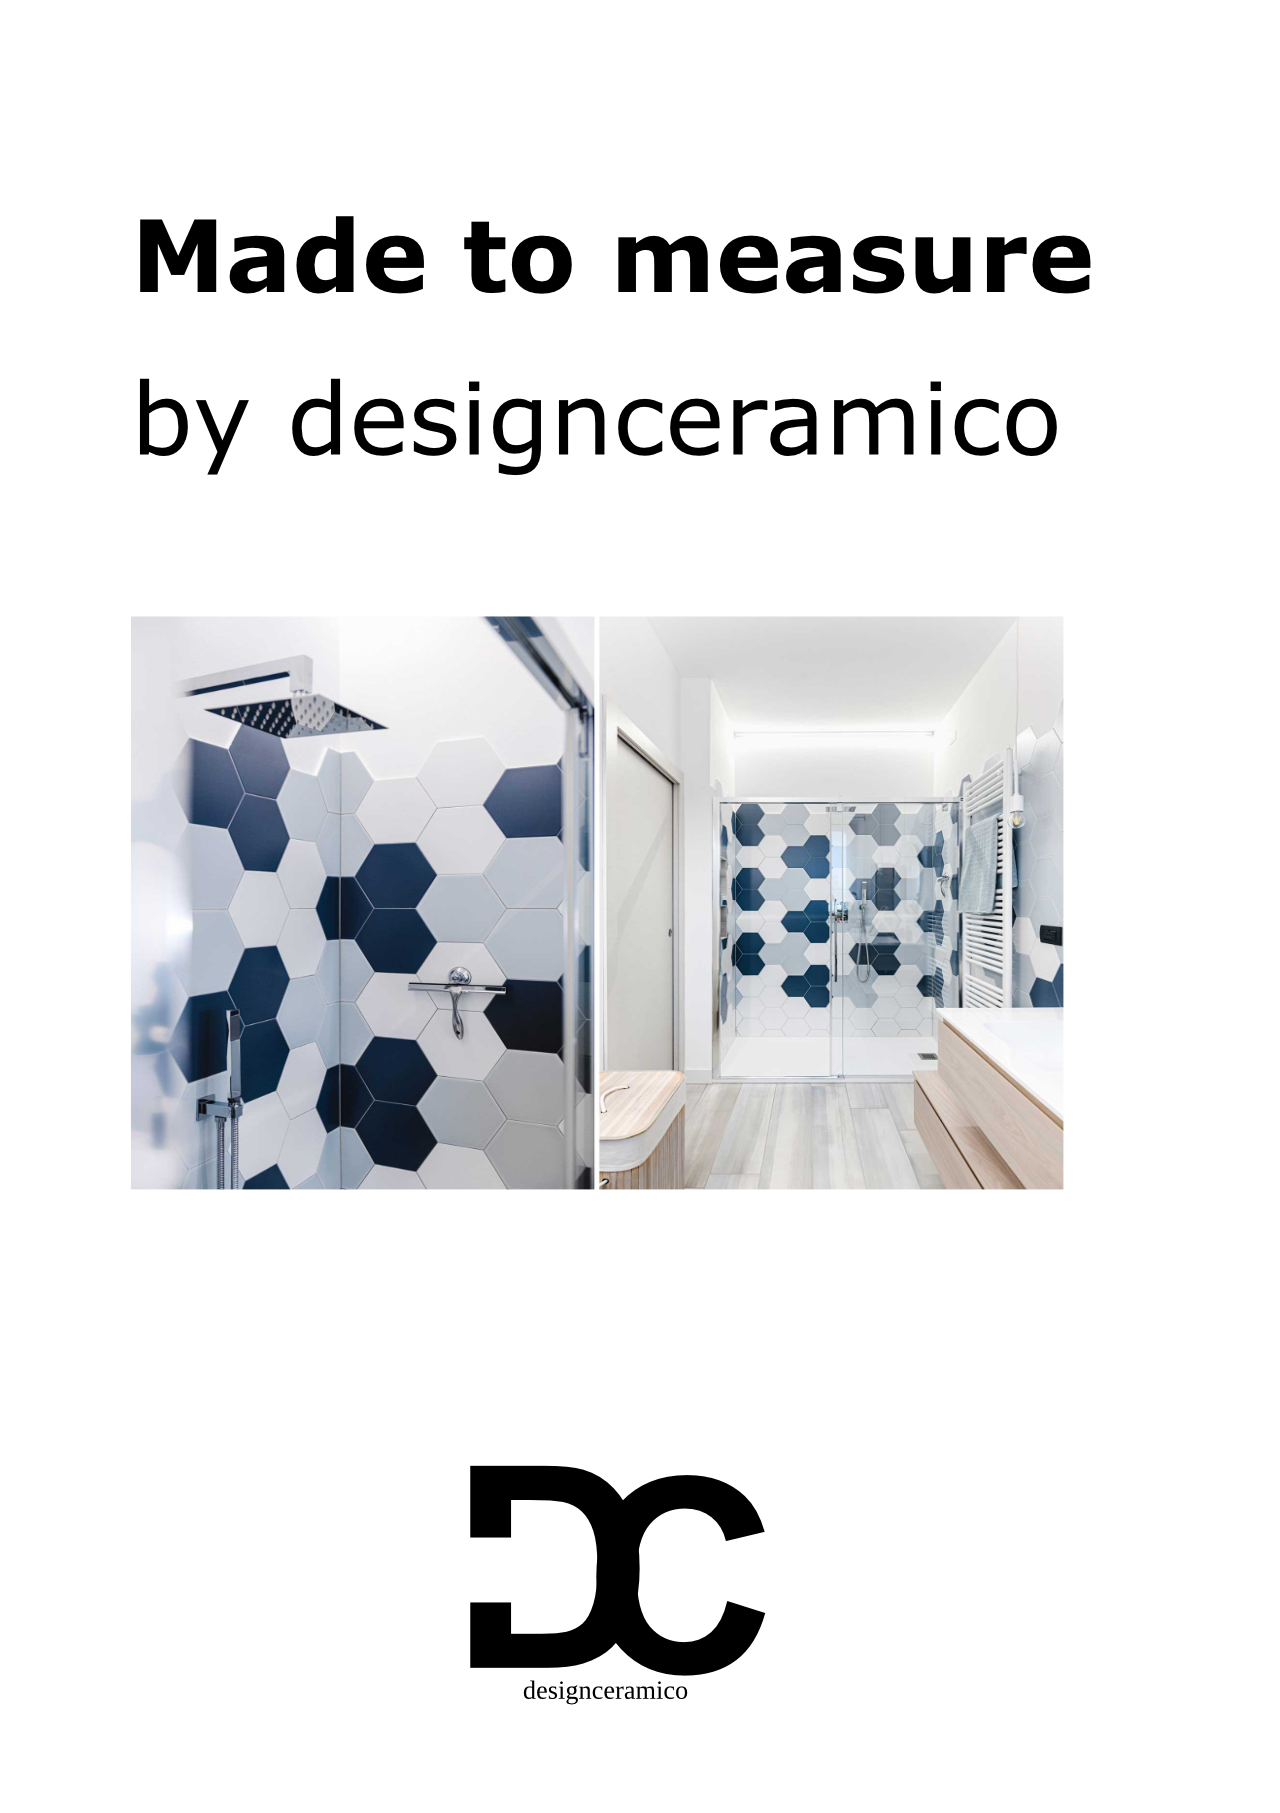 MadetoMeasure by DesignCeramico